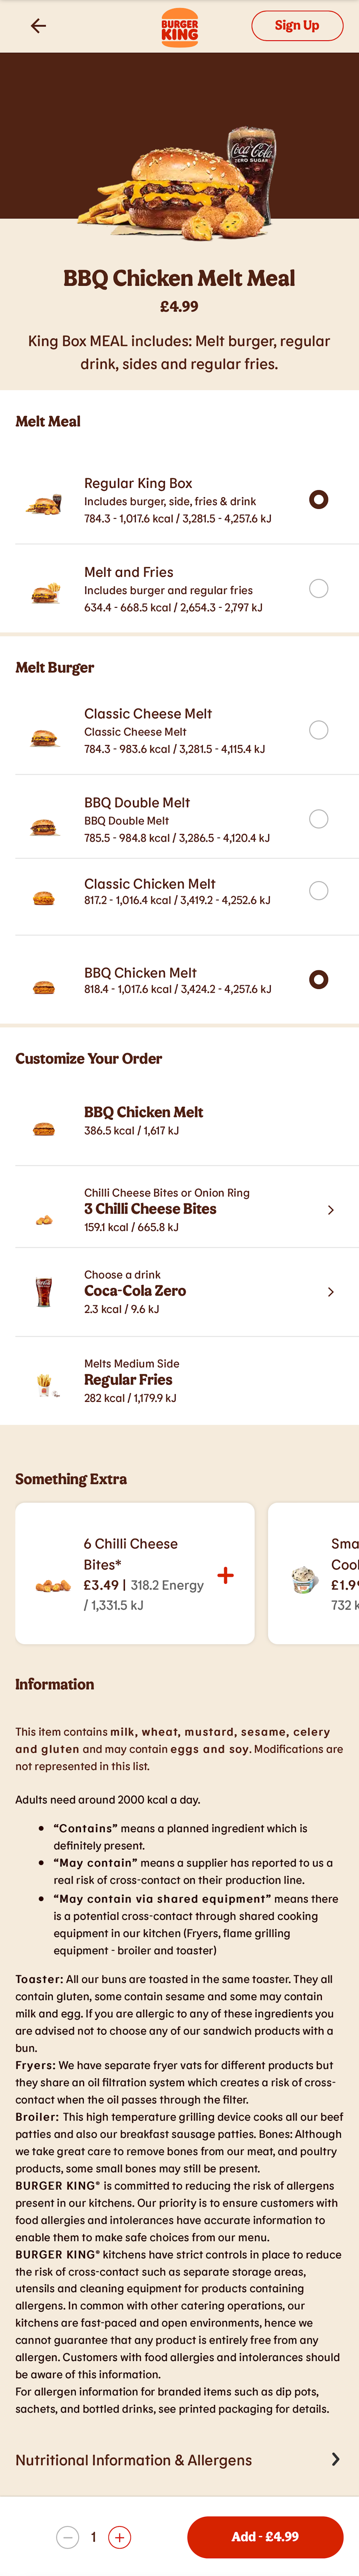 Mobile screenshot of Burger King